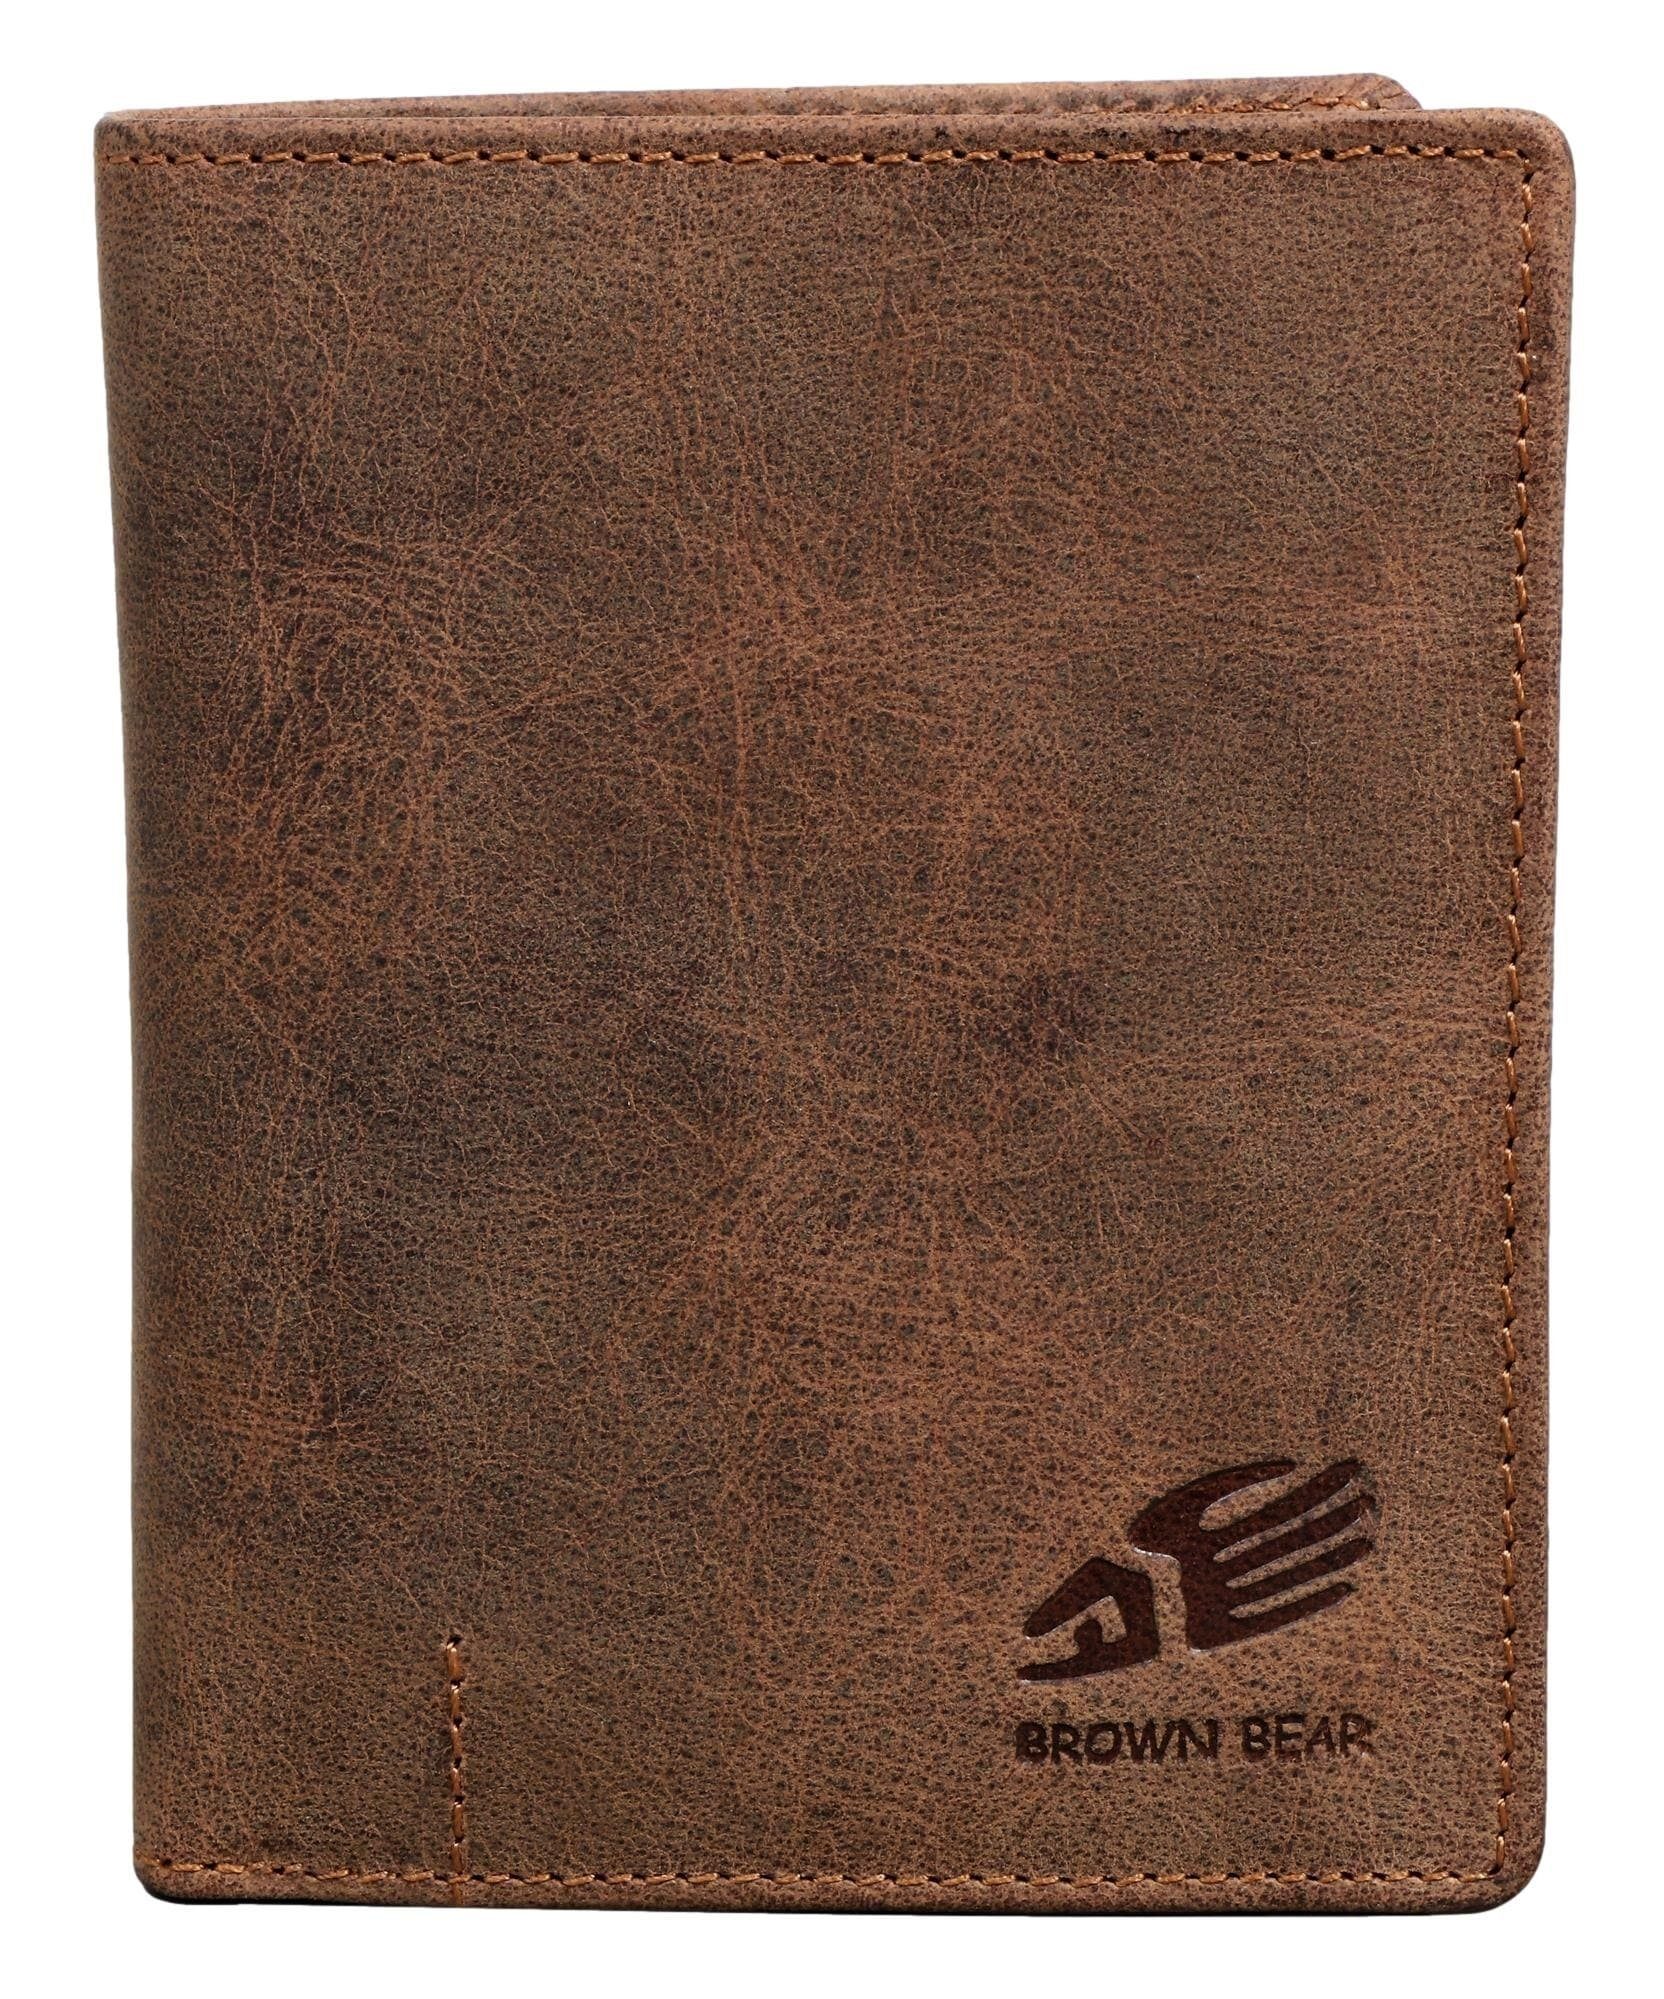 Brown Bear Geldbörse IBP 2051 Reißverschlussinnenfach Unisex Echtleder, 11 Kartenfächer Sichtfach RFID Schutz Braun Vintage Braun-Vintage | Geldbörsen